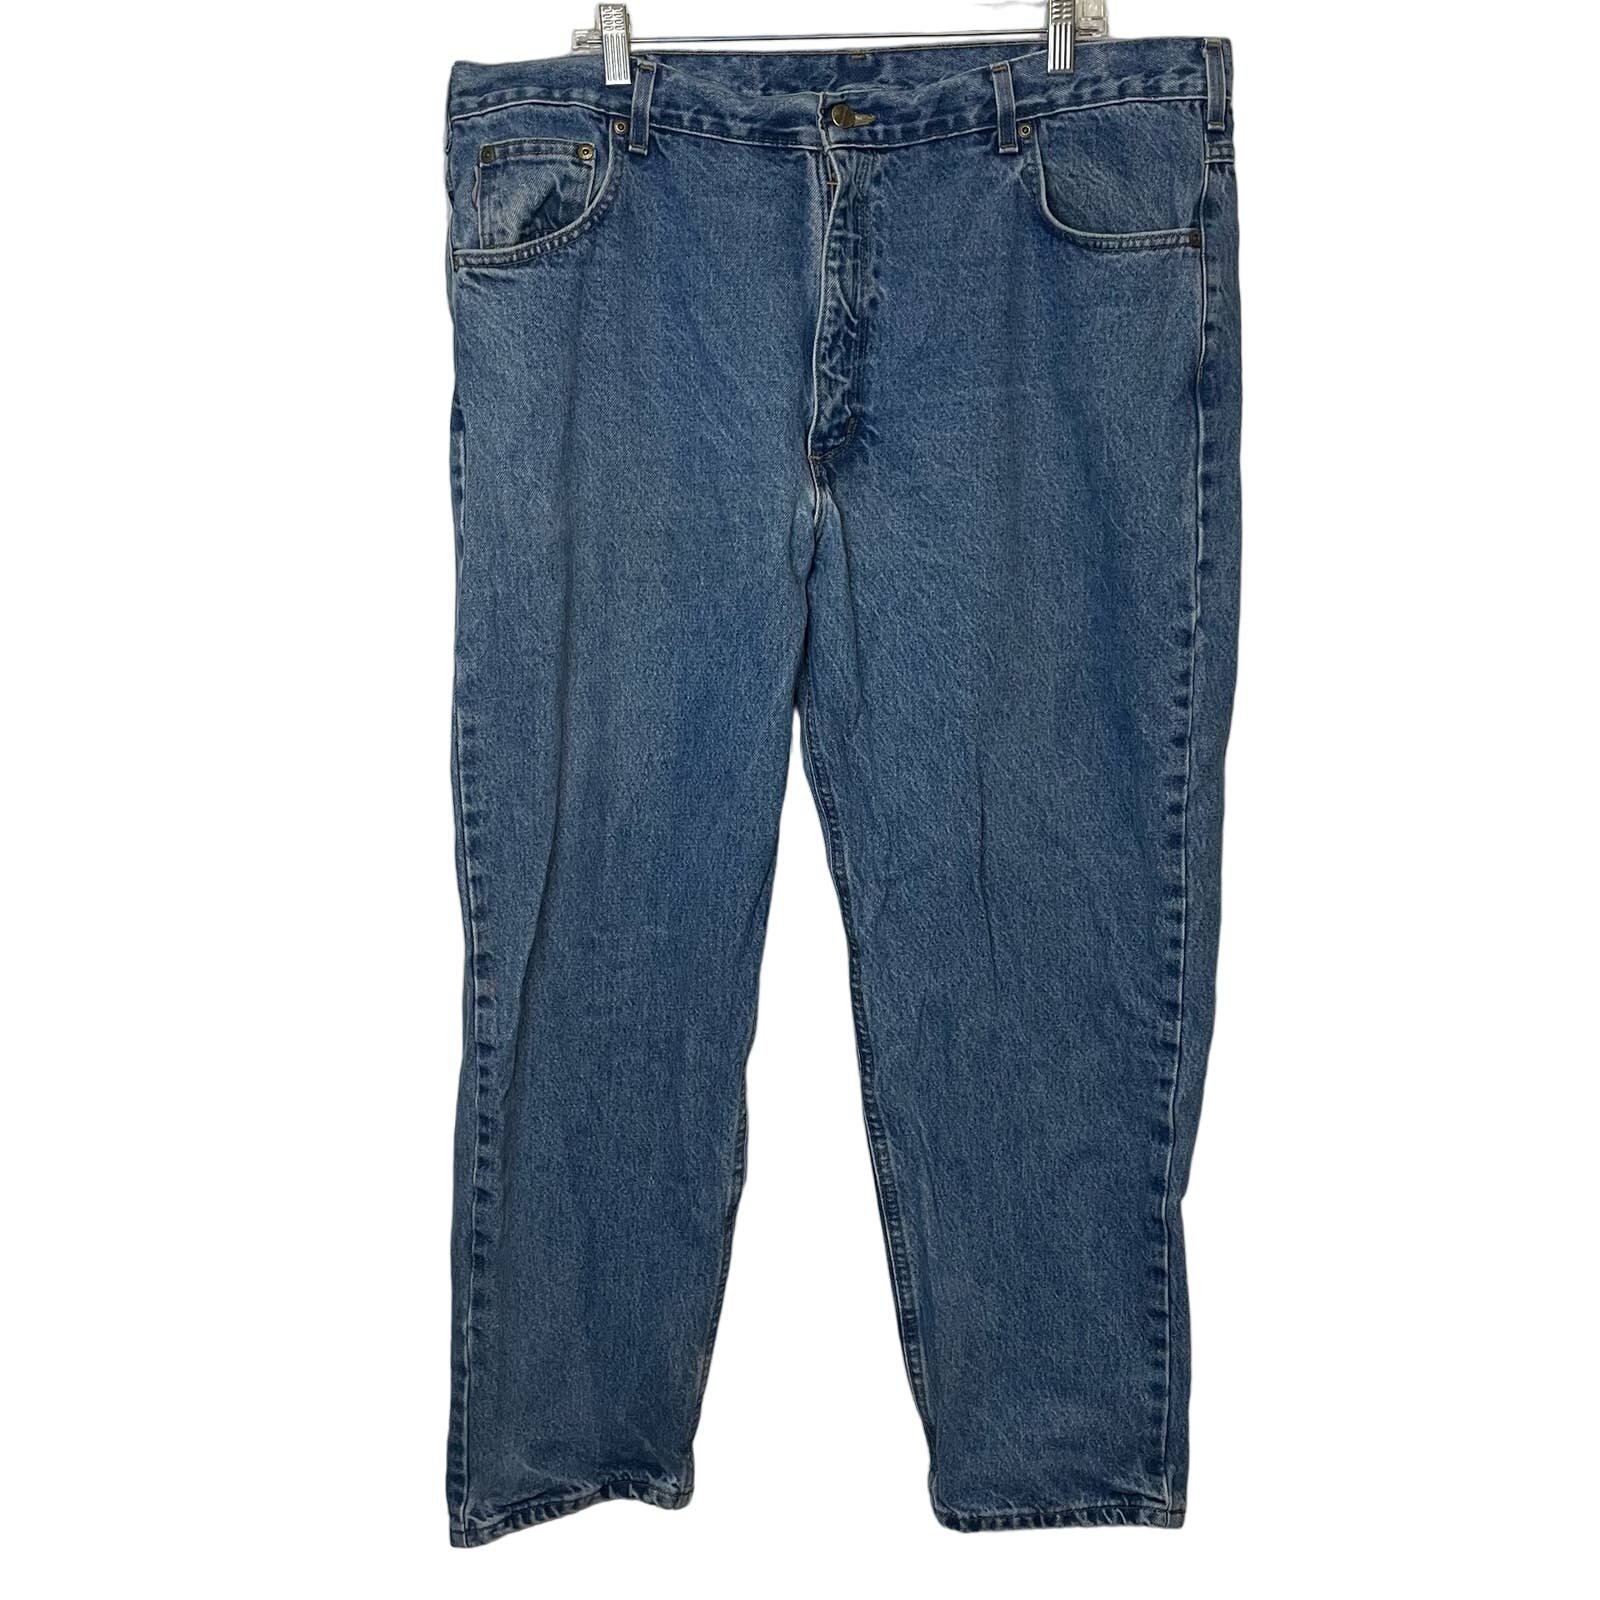 Carhartt Men´s Relaxed Fit Medium Wash Work Jeans size 42x30 L1R1Xxpav